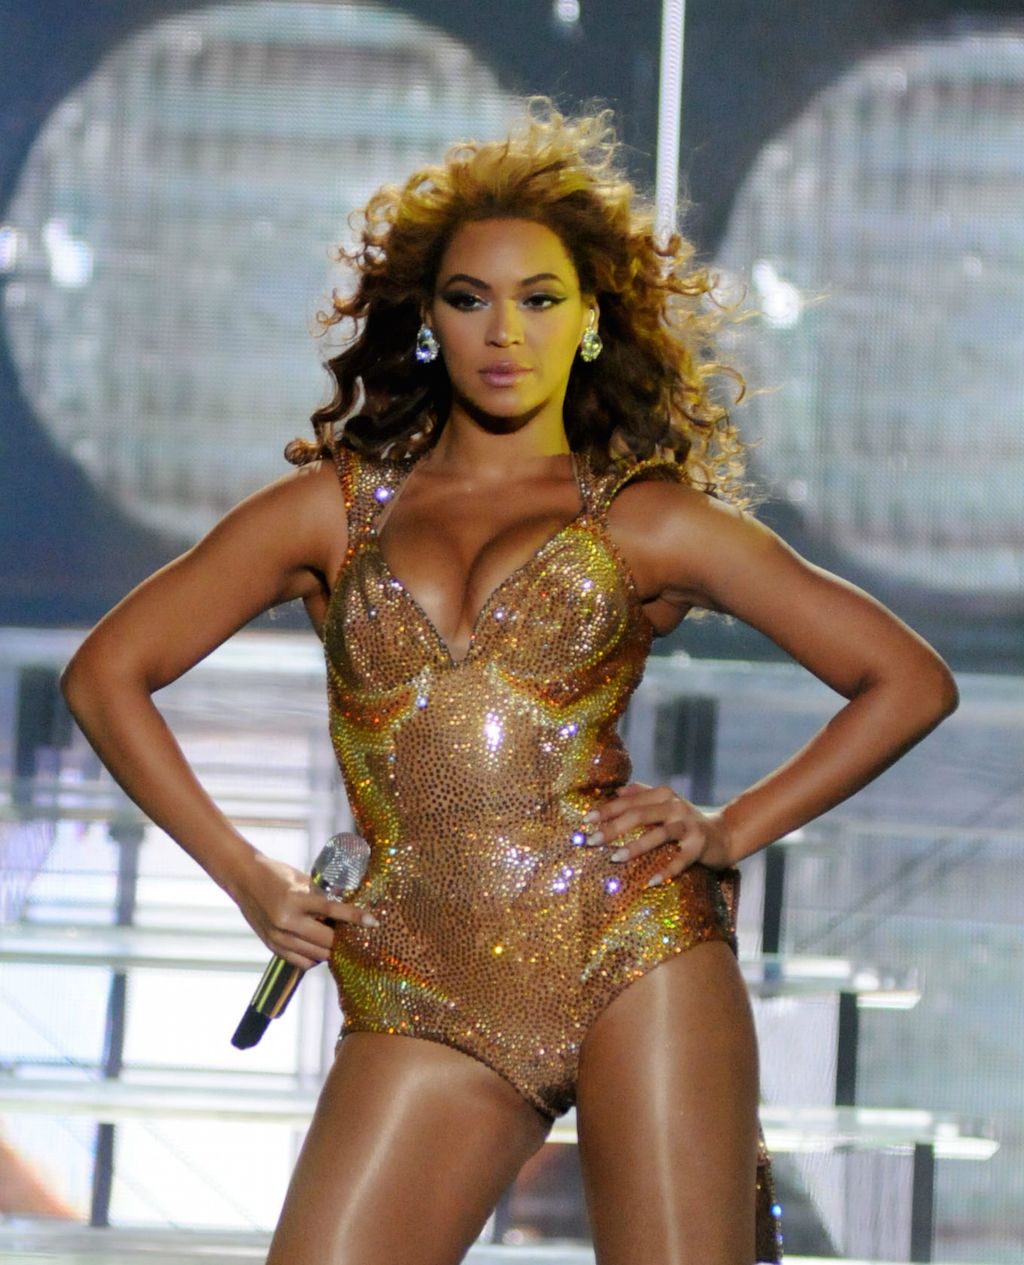 Beyonce power poza чудо жена поза